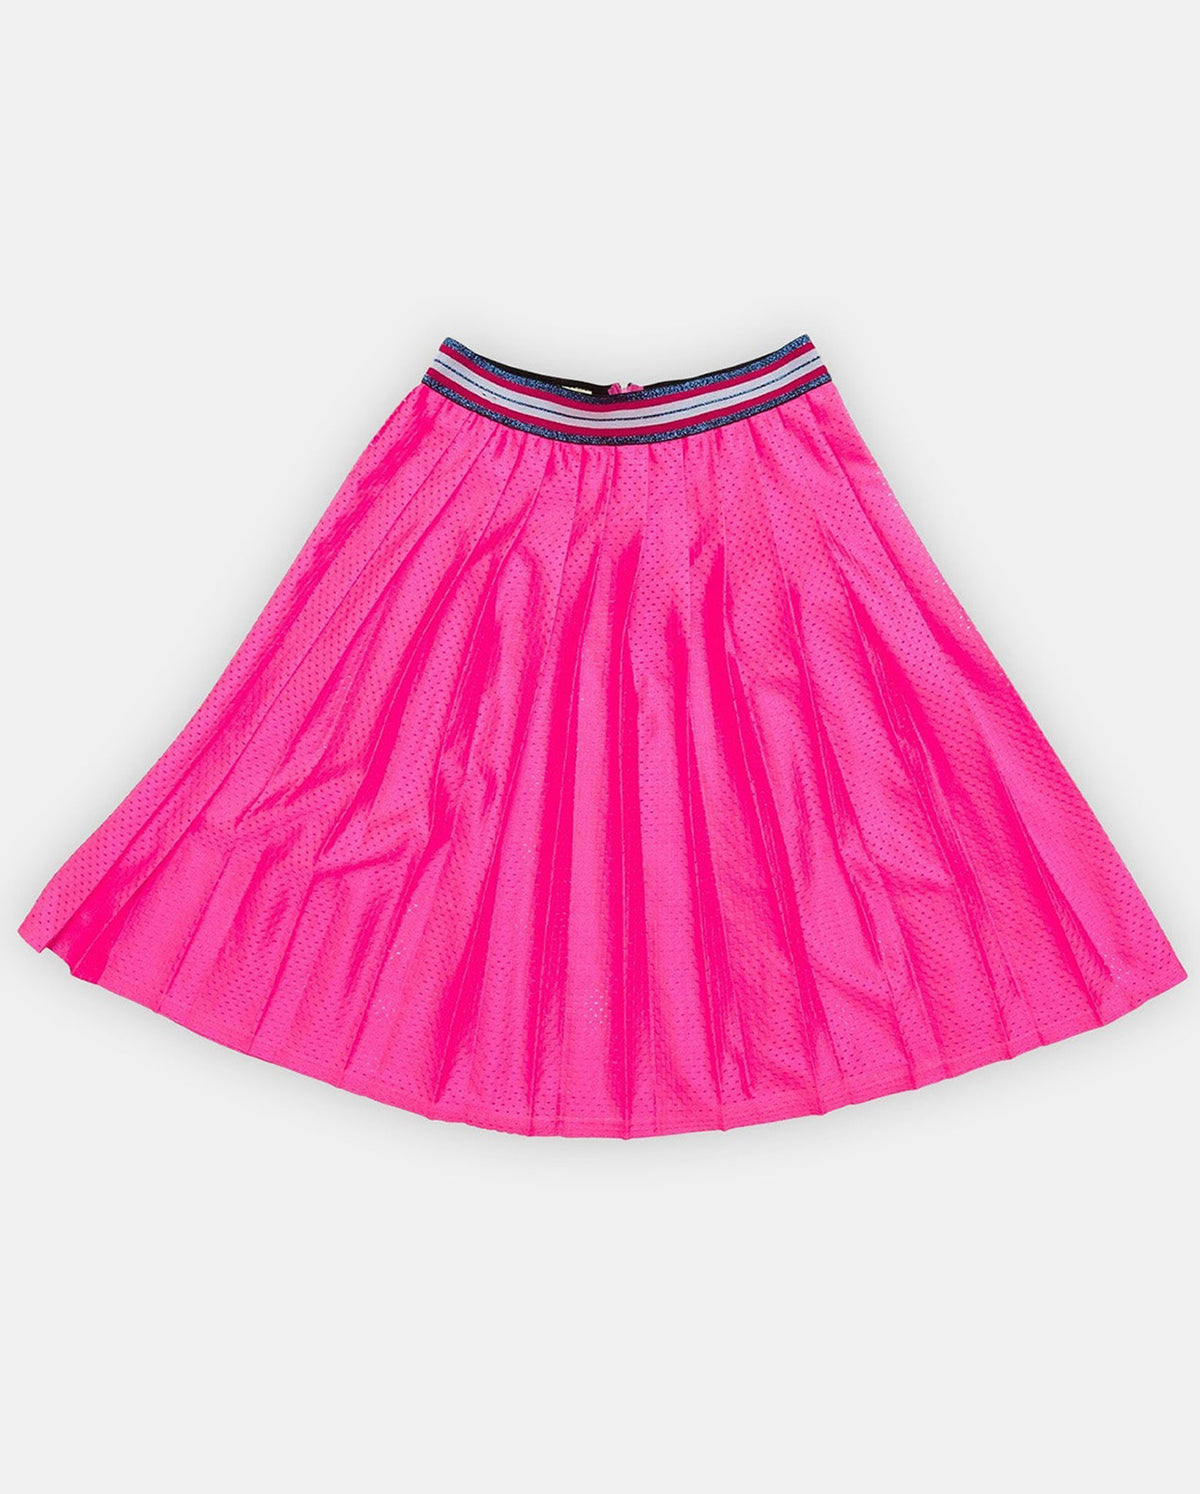 Veronica Skirt In Pink